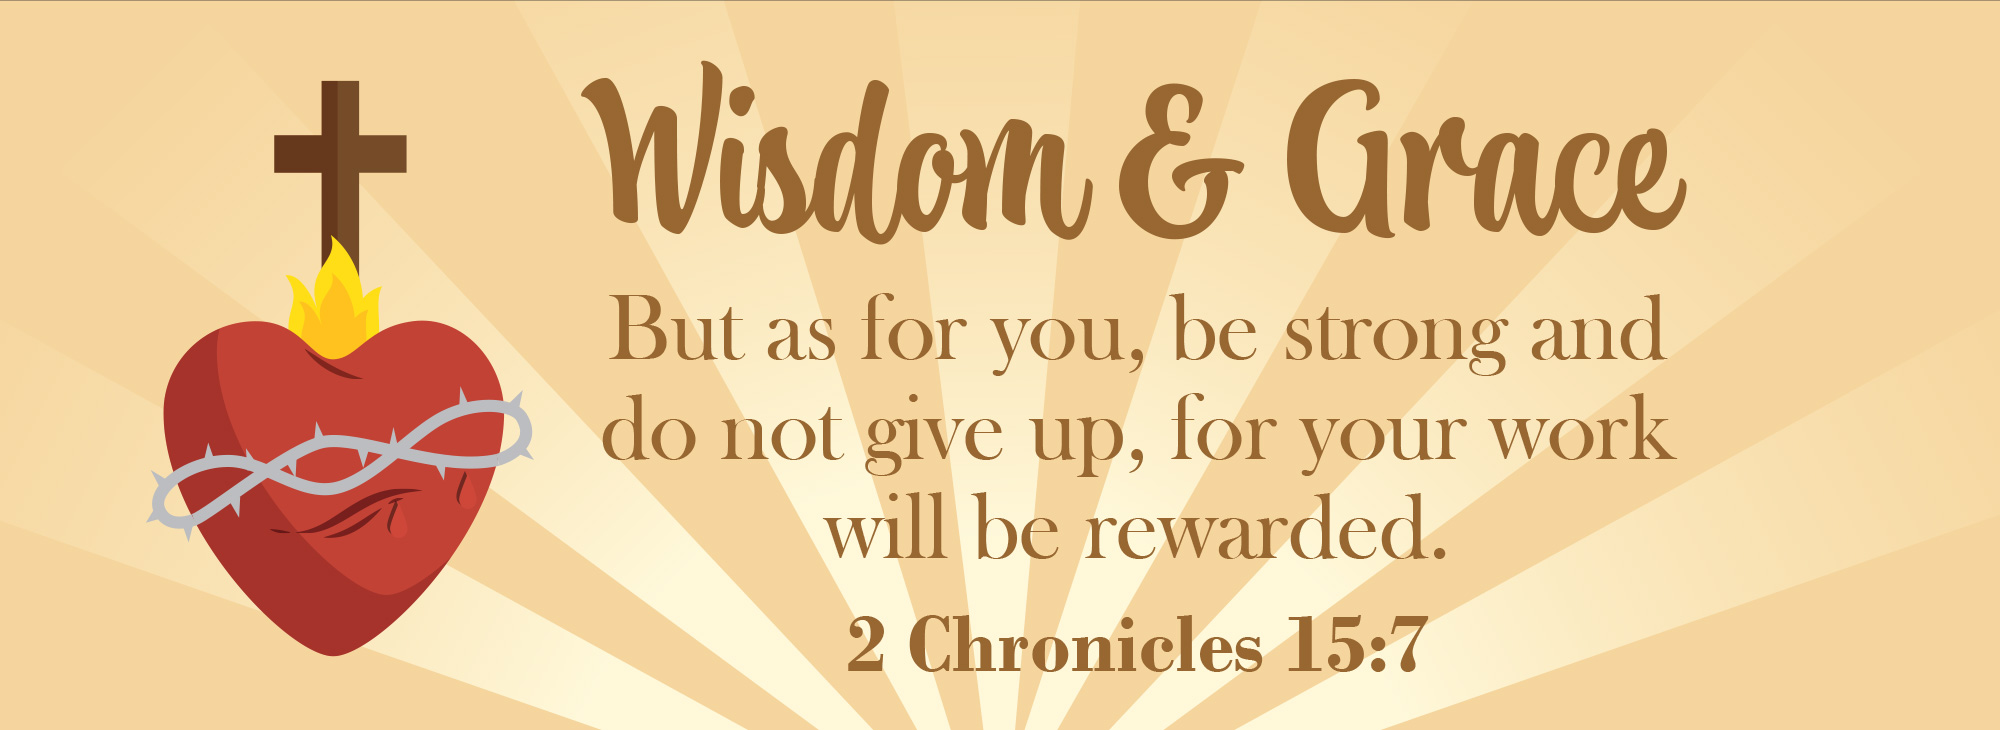 Wisdom and Grace verse